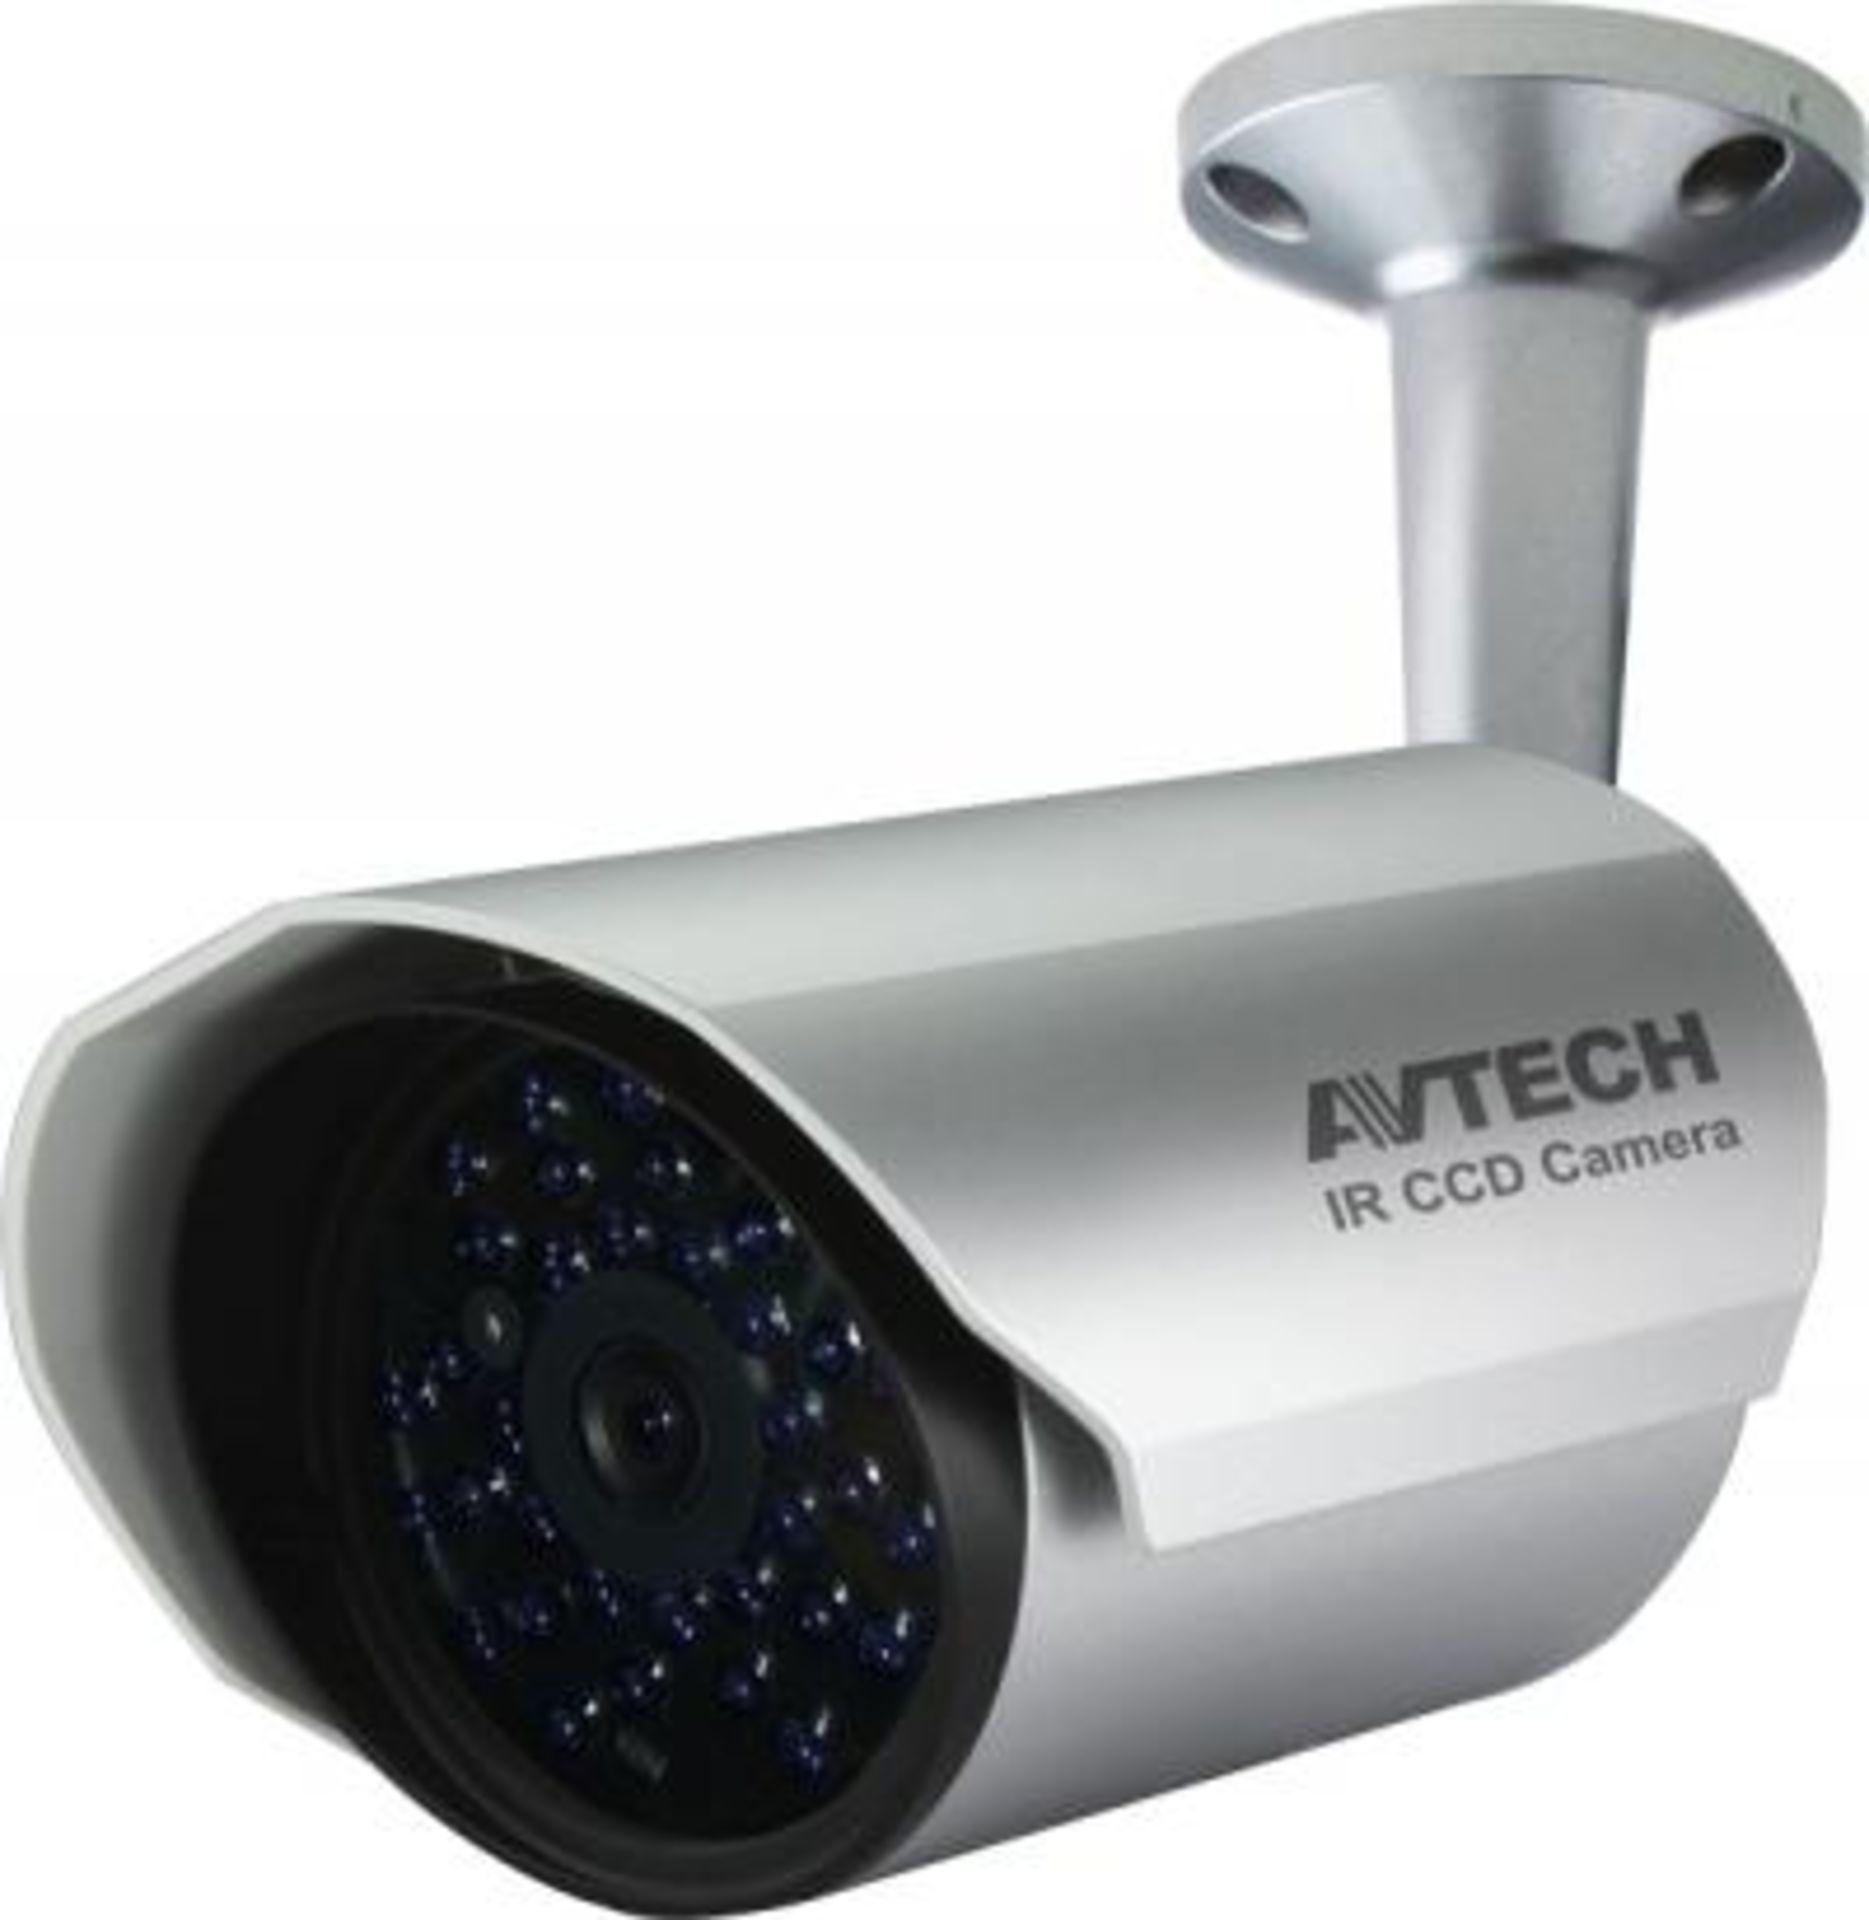 V *TRADE QTY* Brand New Avtech Bullet Camera -1/3" Sony Super HAD CCD- 540TVL- 60 Degrees viewing